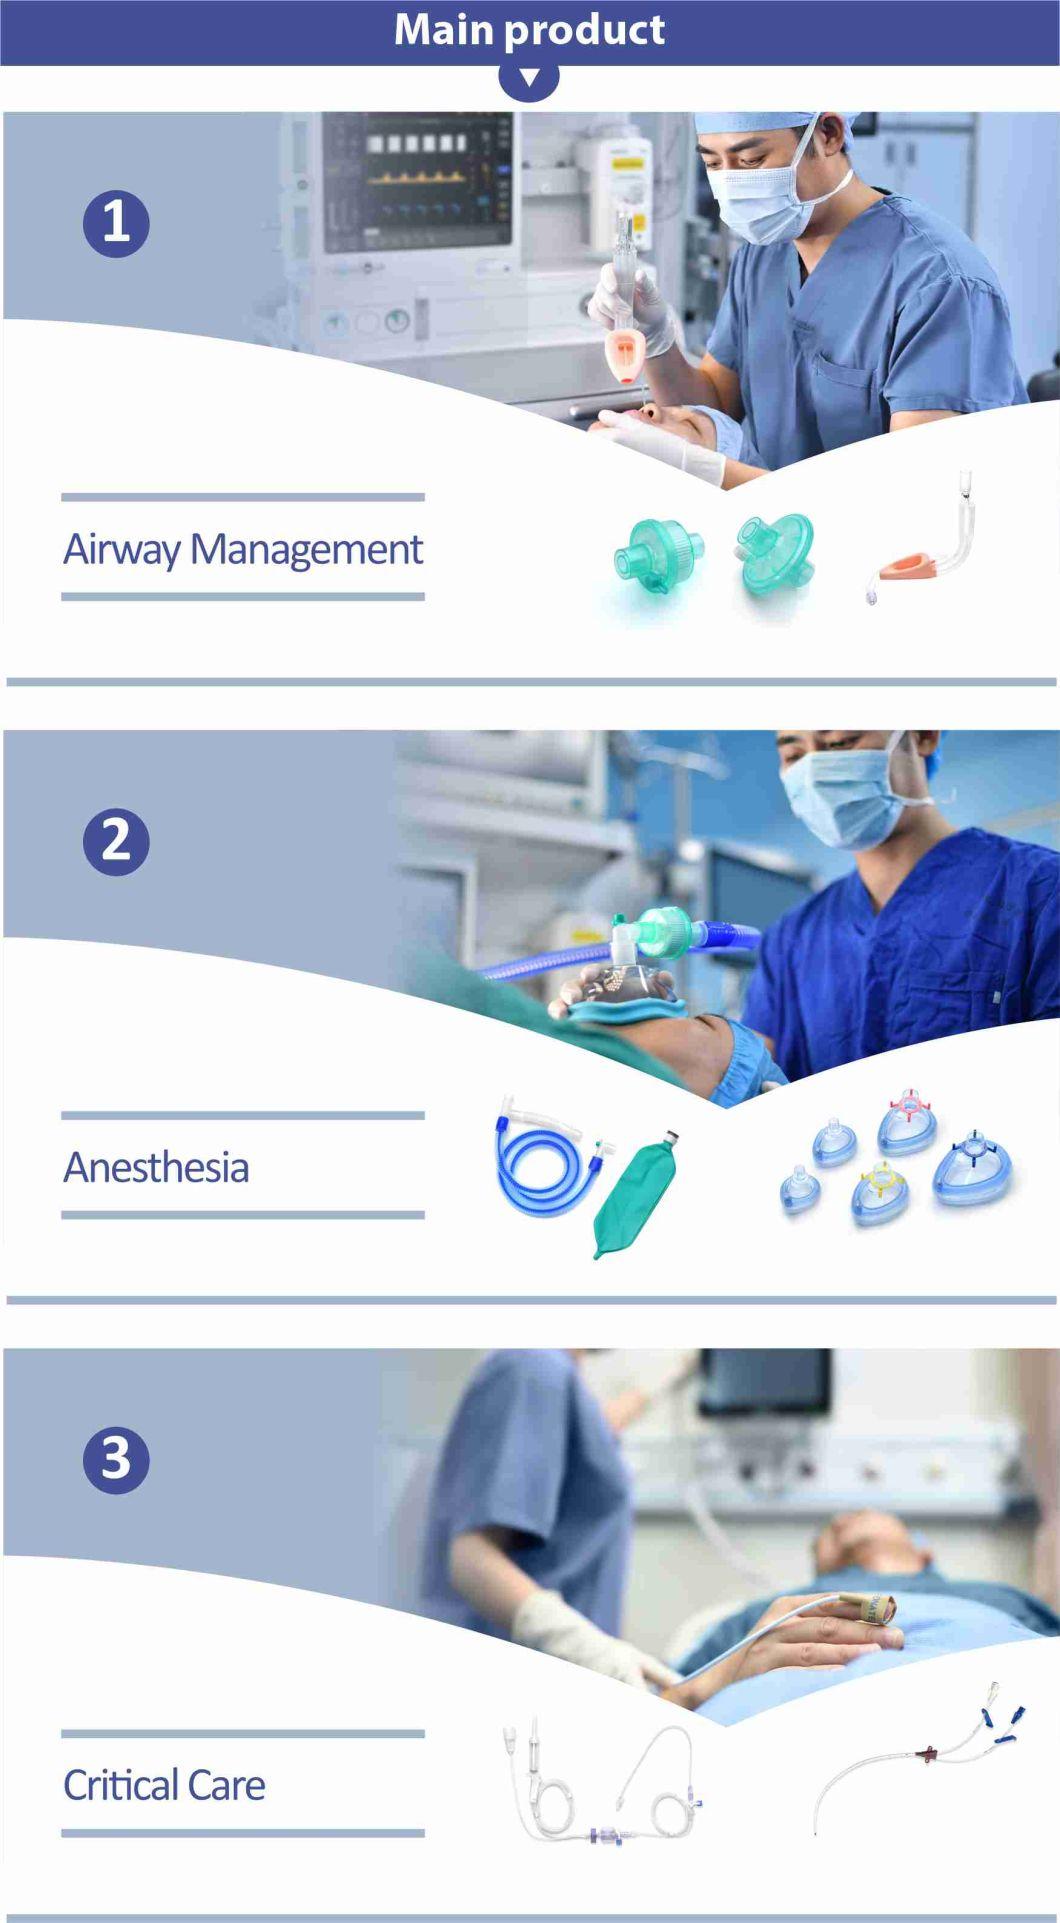 Hisern Medical 3-Inch HD Monitor Anesthesia Video Laryngoscope